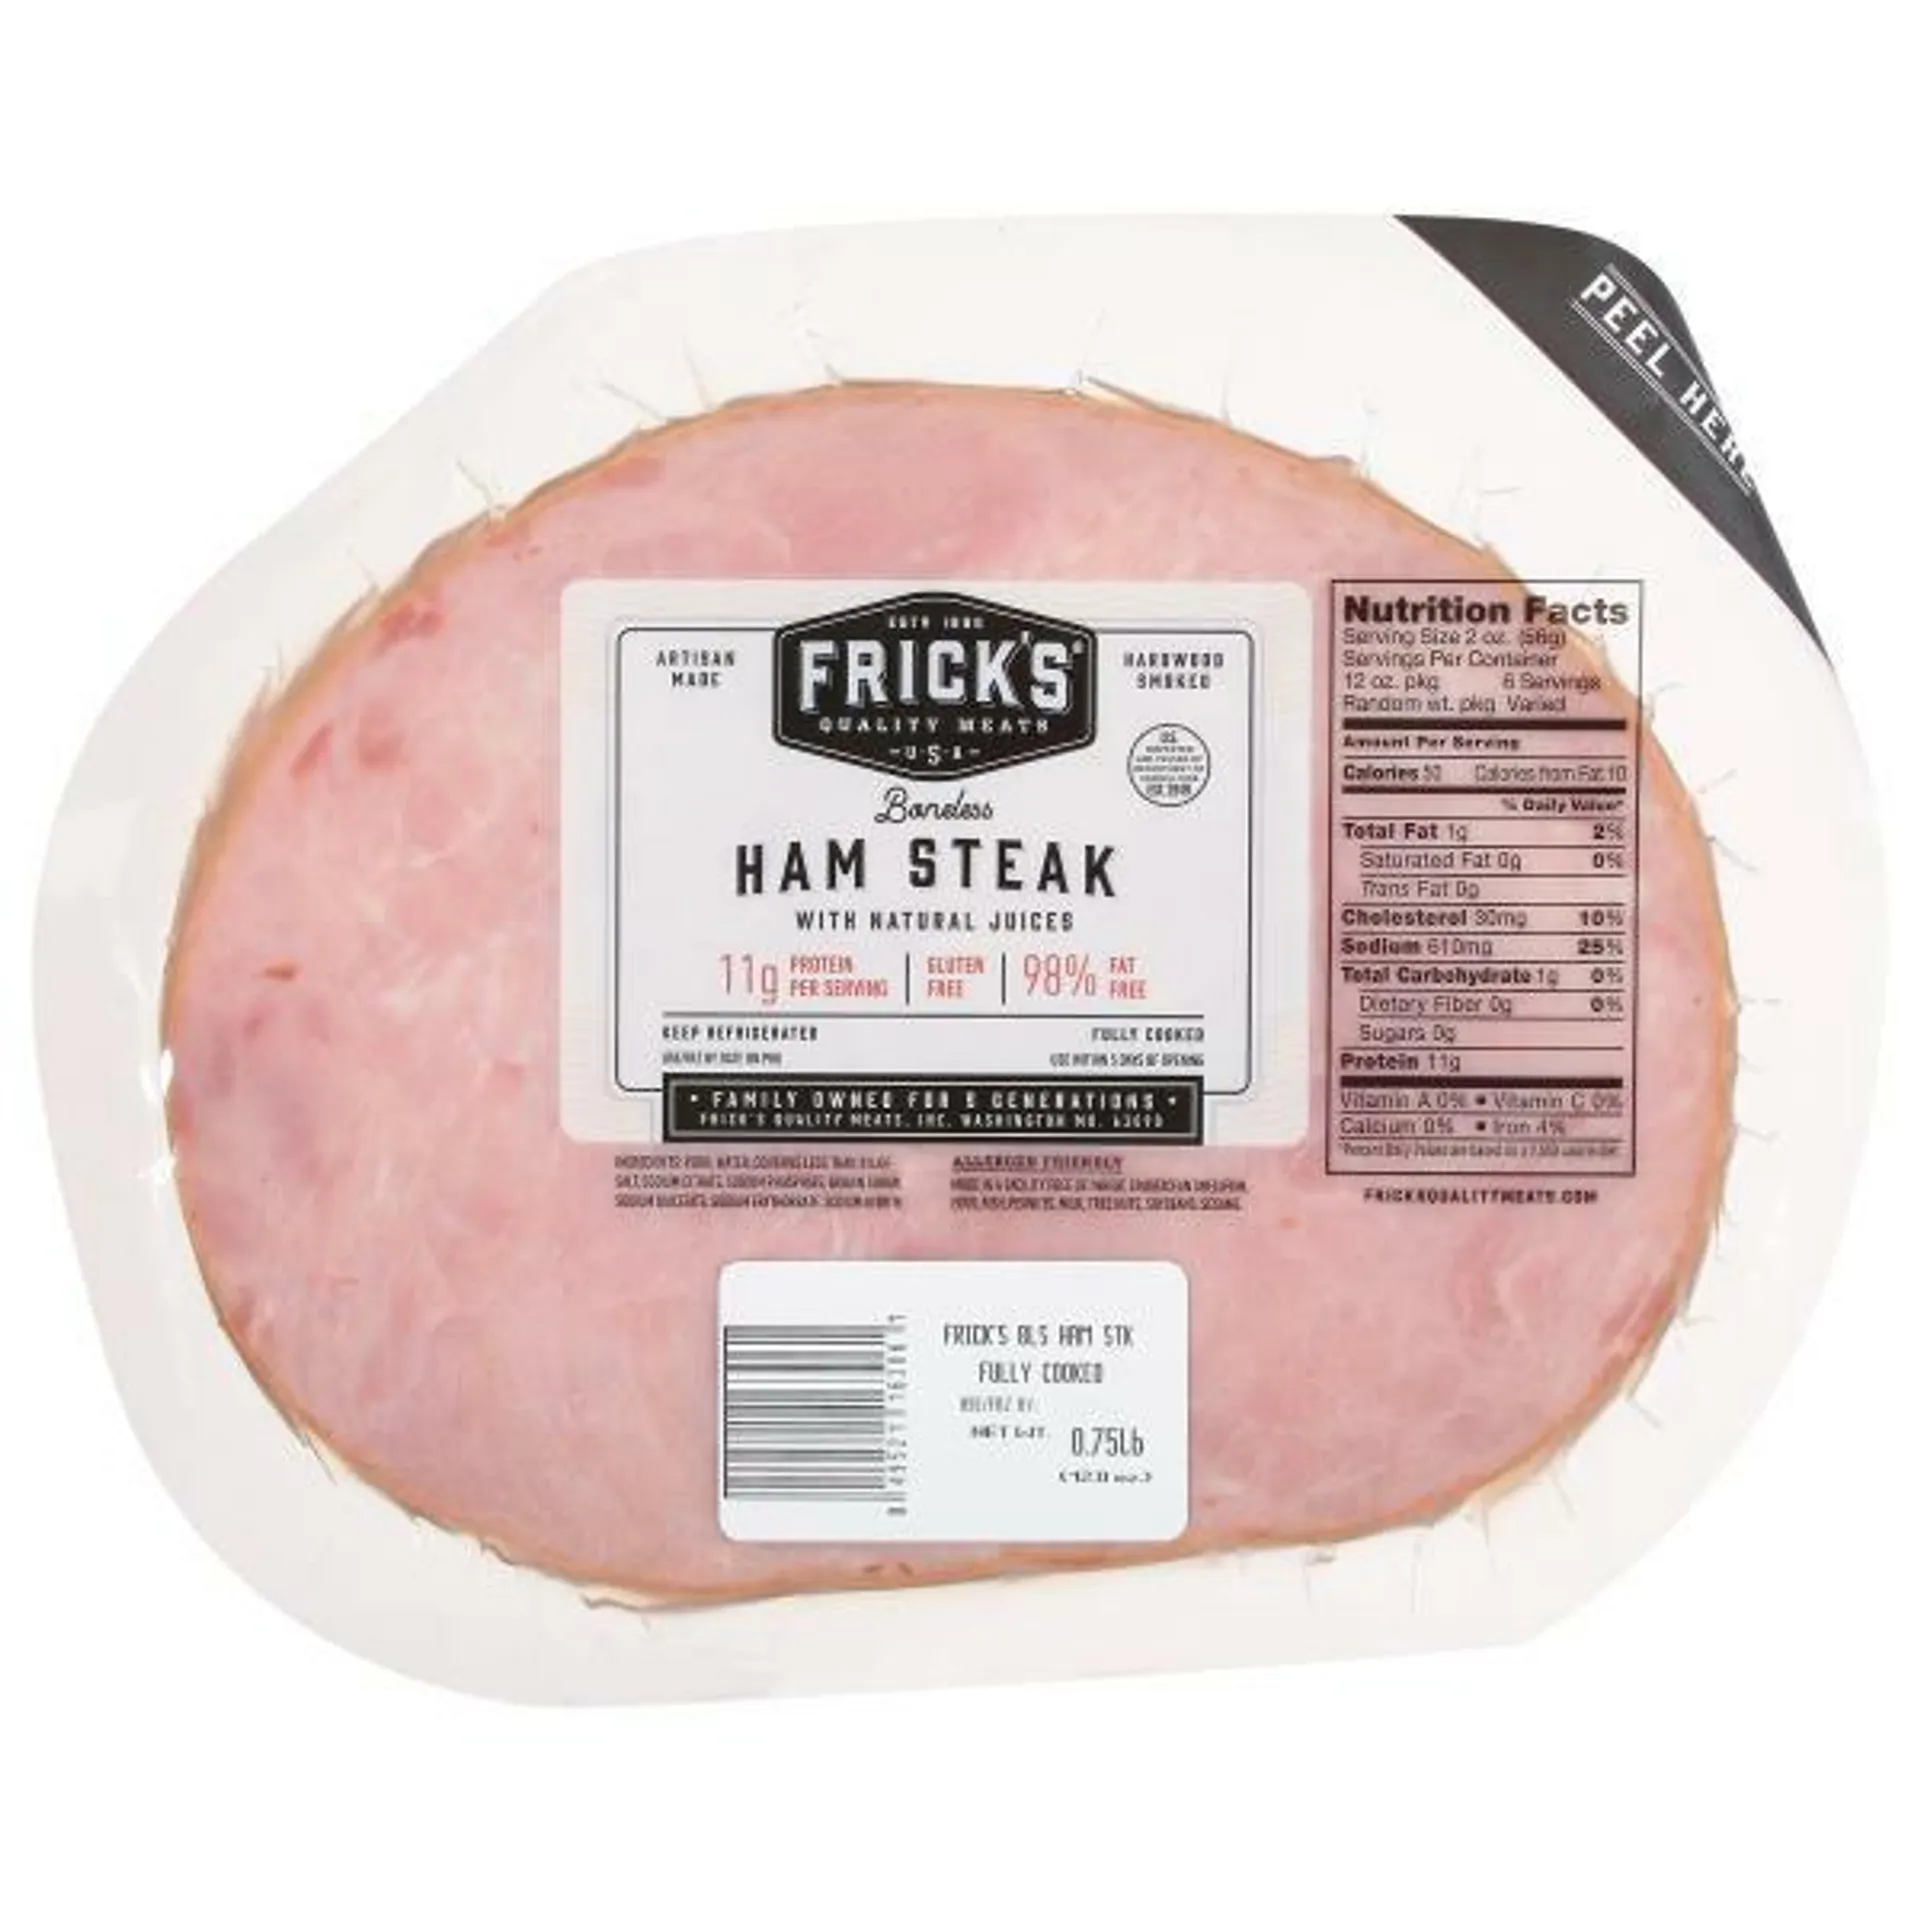 Frick's Ham Steak, with Natural Juices, Boneless